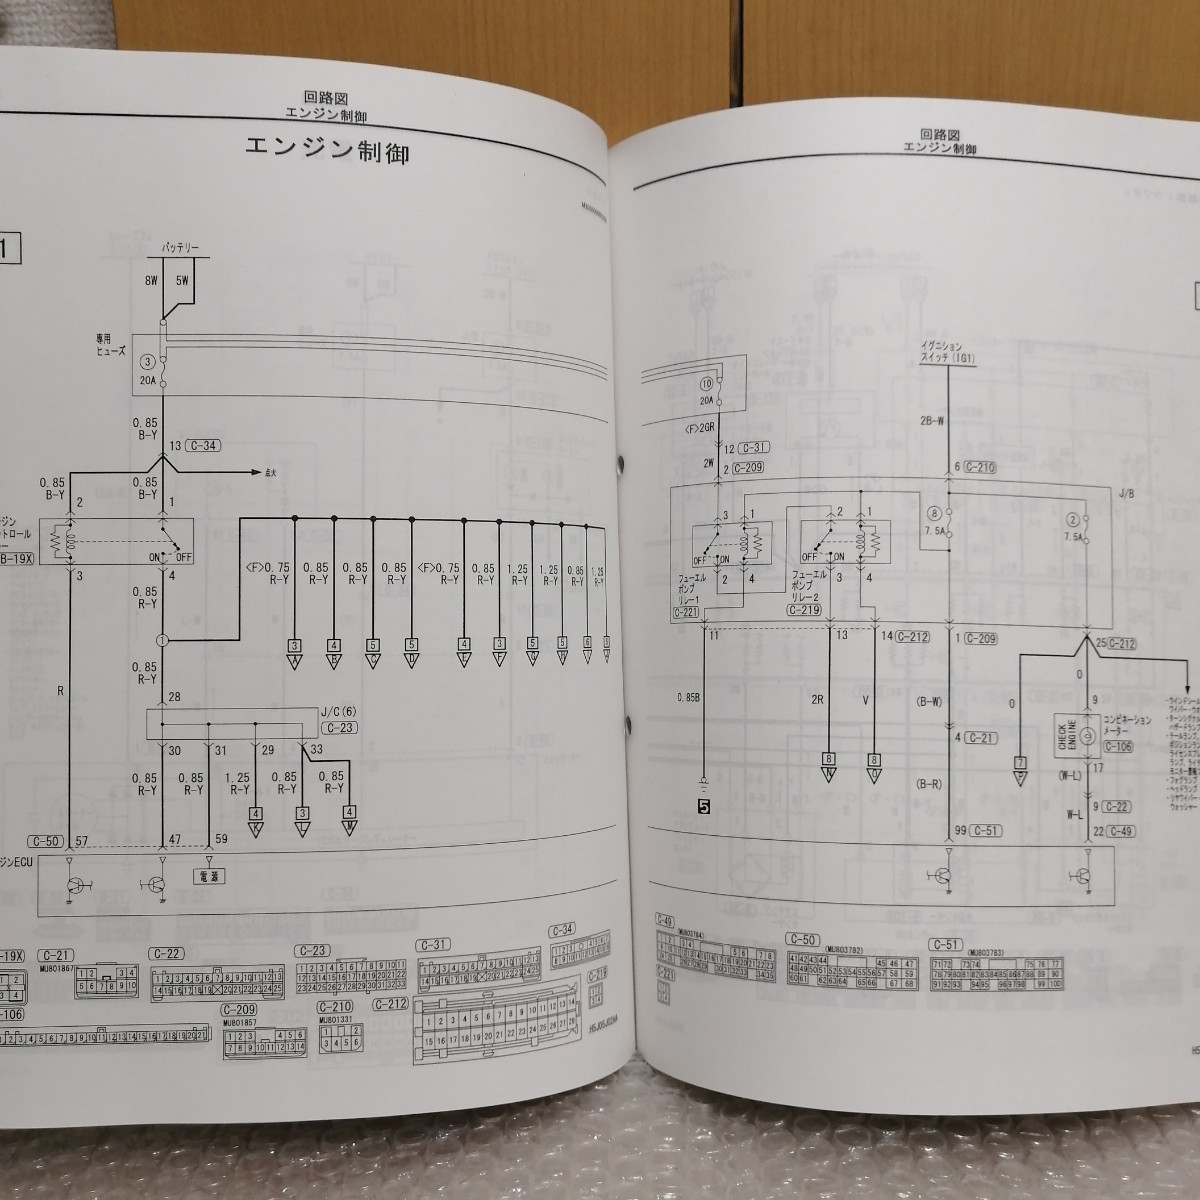  Mitsubishi Lancer Evolution 9 maintenance manual electric wiring diagram compilation supplement version 2005-3*CT9A Lancer Evolution LANCER Evolution Ⅸ 1036K82